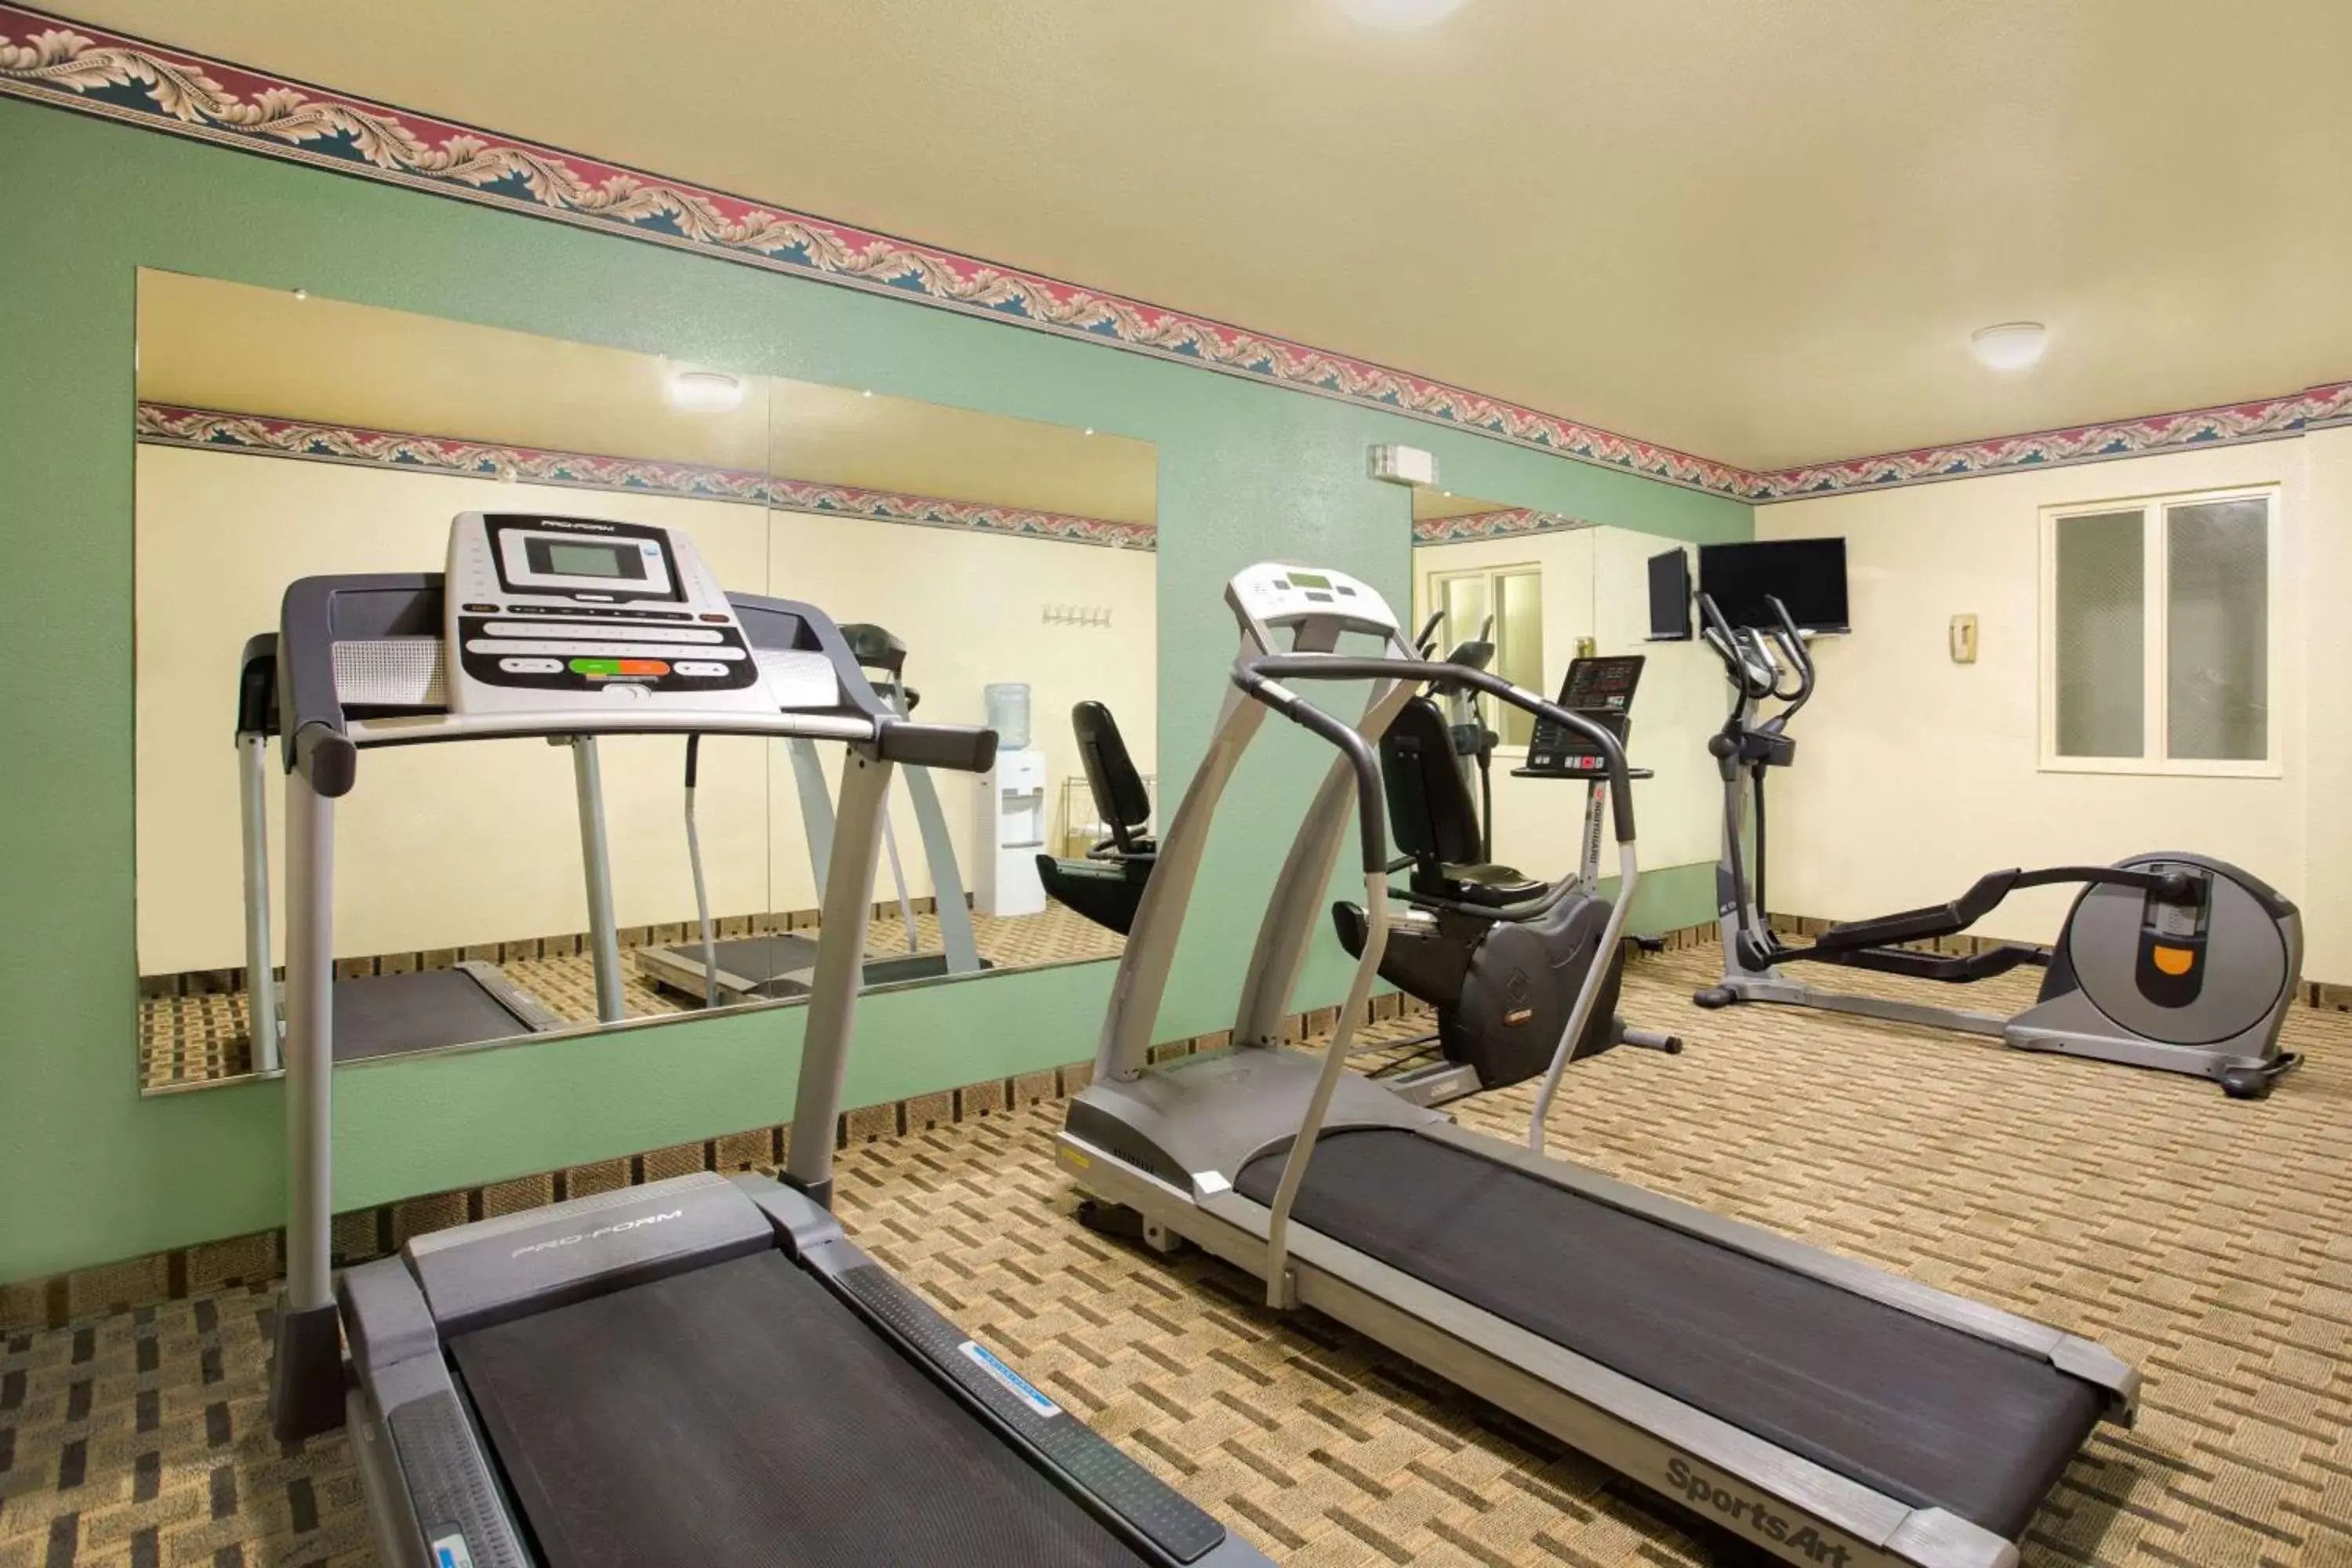 Fitness centre/facilities, Fitness Center/Facilities in Super 8 by Wyndham Lynchburg VA